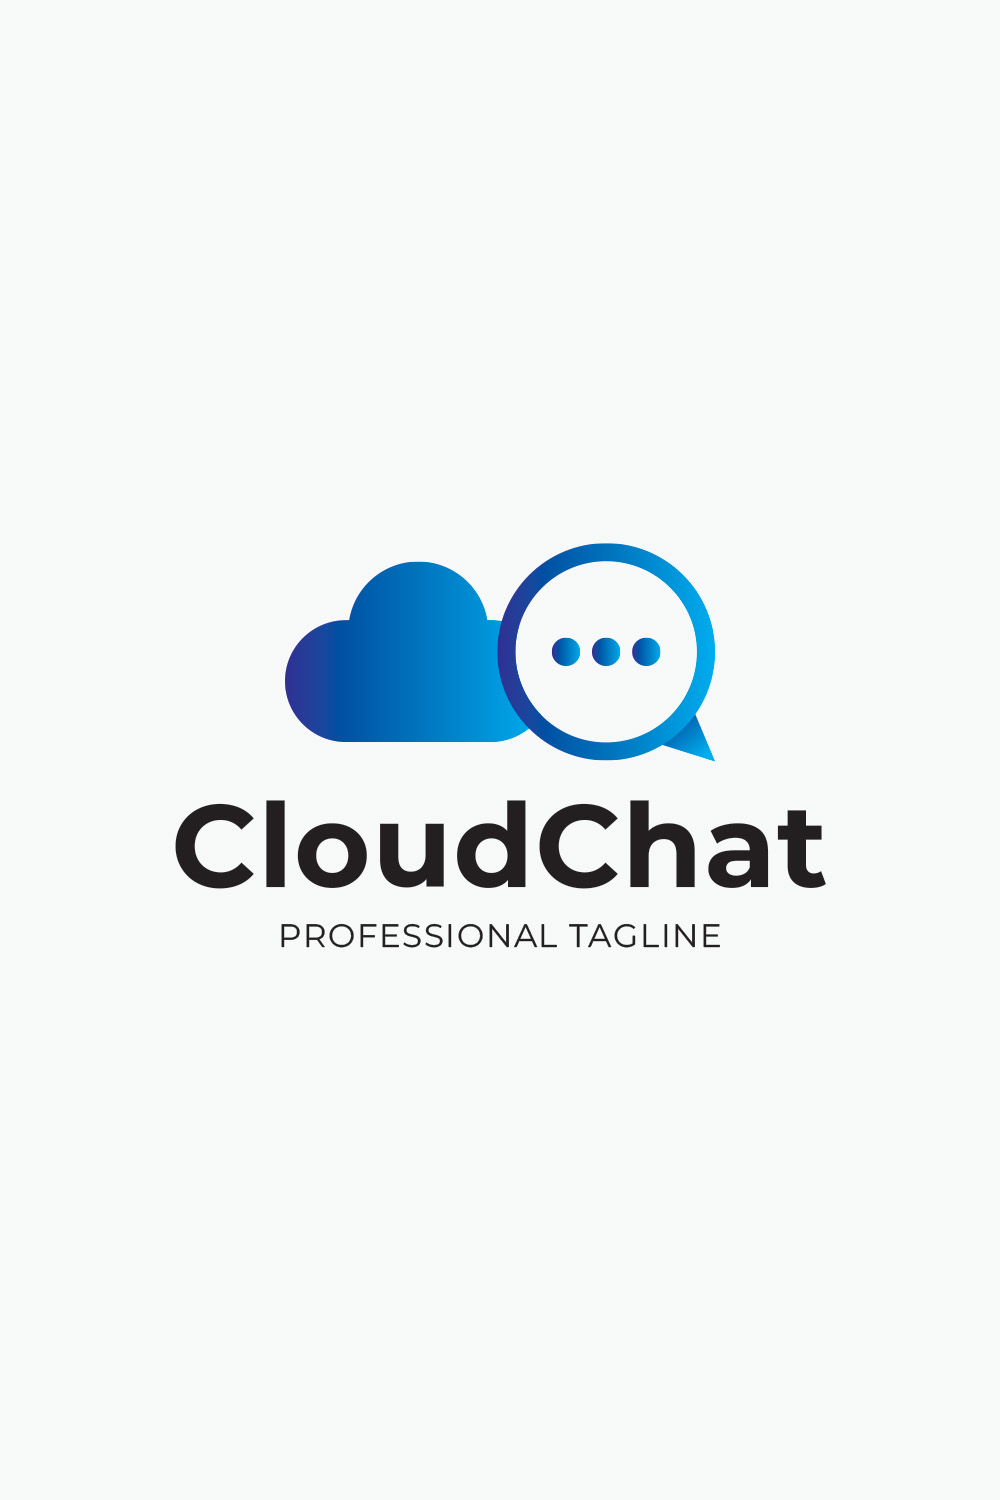 Cloud Chat Logo Template Pinterest image.